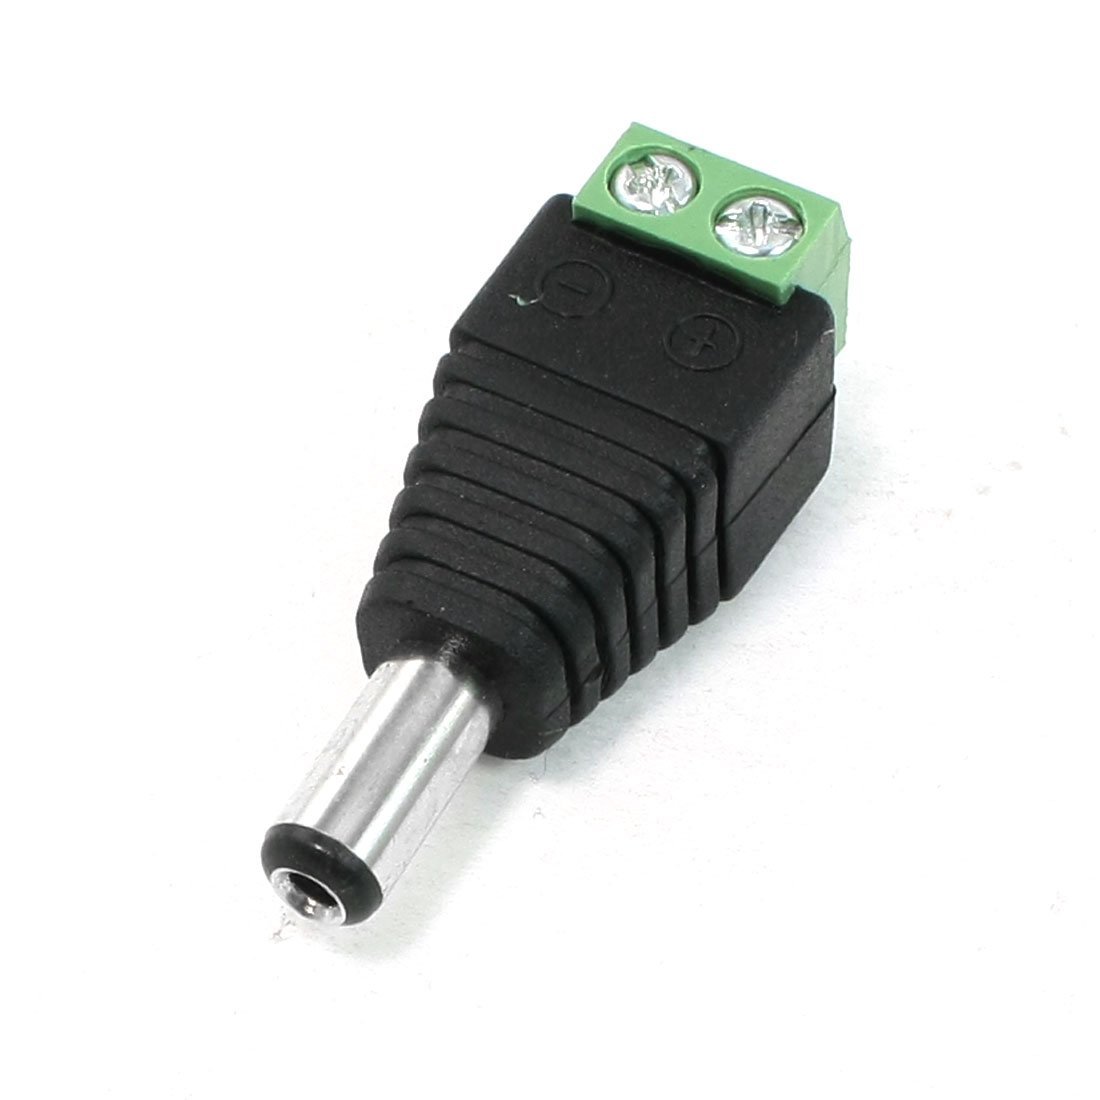 10PCS-5521mm-DC-Power-Male-Plug-Jack-Adapter-Connector-for-CCTV-LED-5050-3528-5630-Strip-Light-1372905